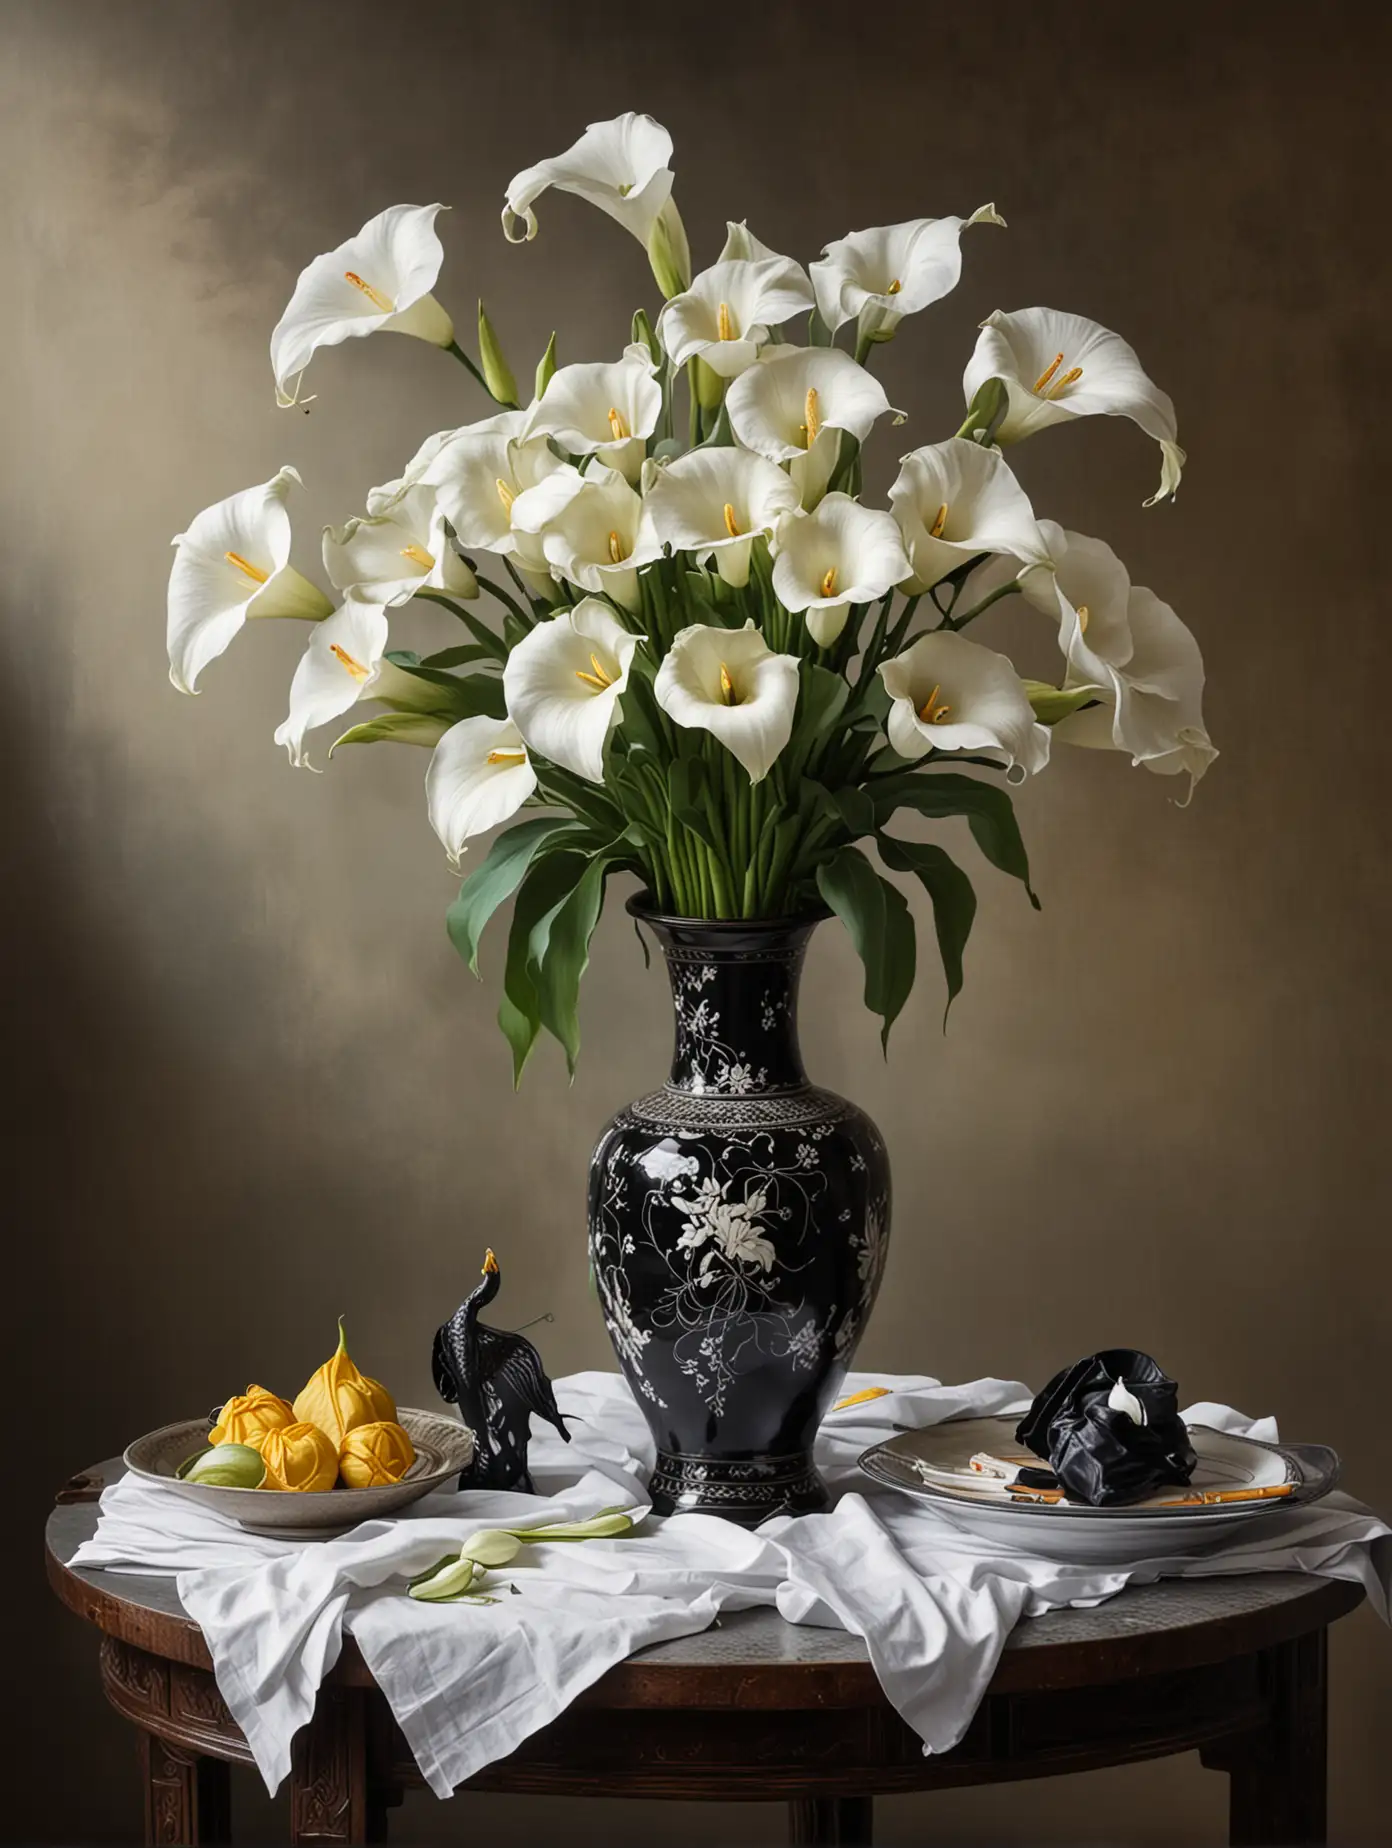 Elegant Oriental Vase Still Life with White Calla Lilies